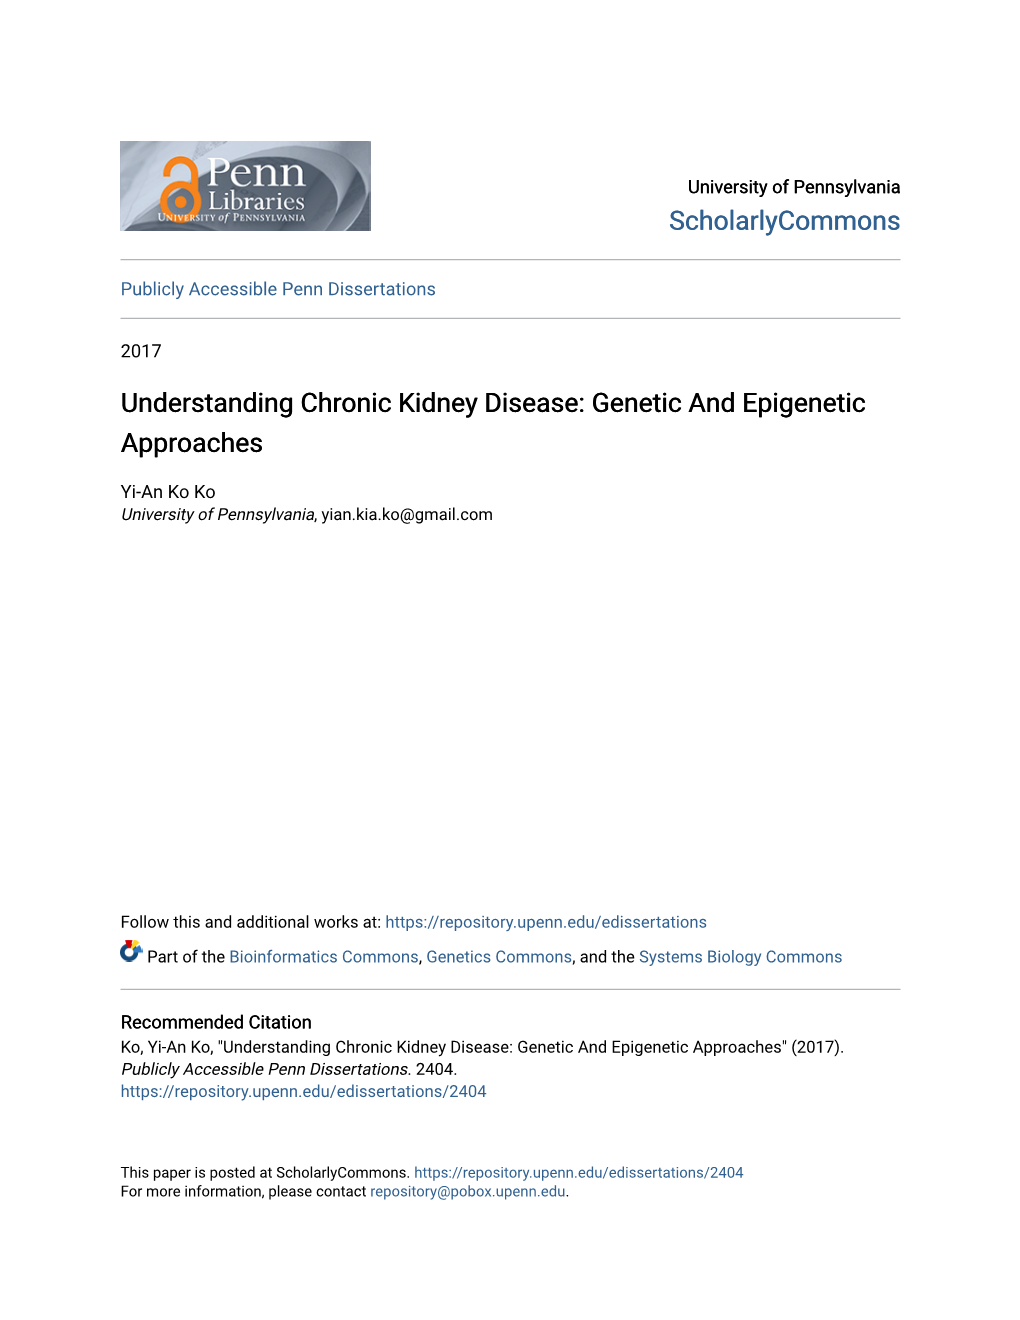 Understanding Chronic Kidney Disease: Genetic and Epigenetic Approaches